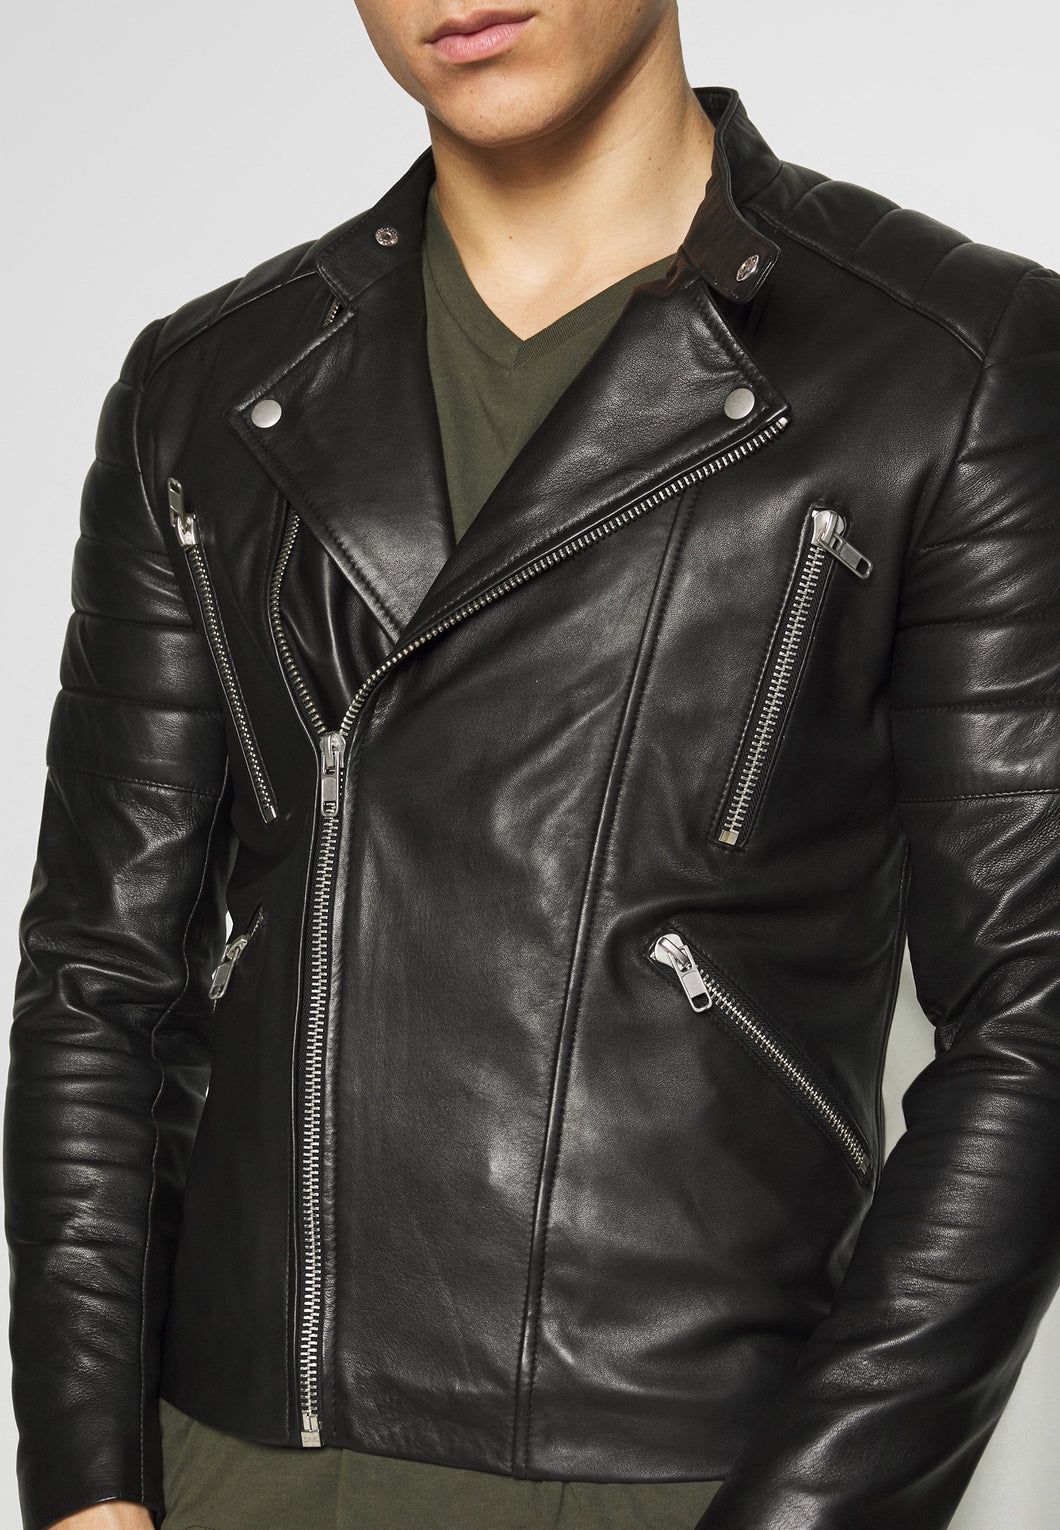 Men's Black Leather Biker Jacket in UK